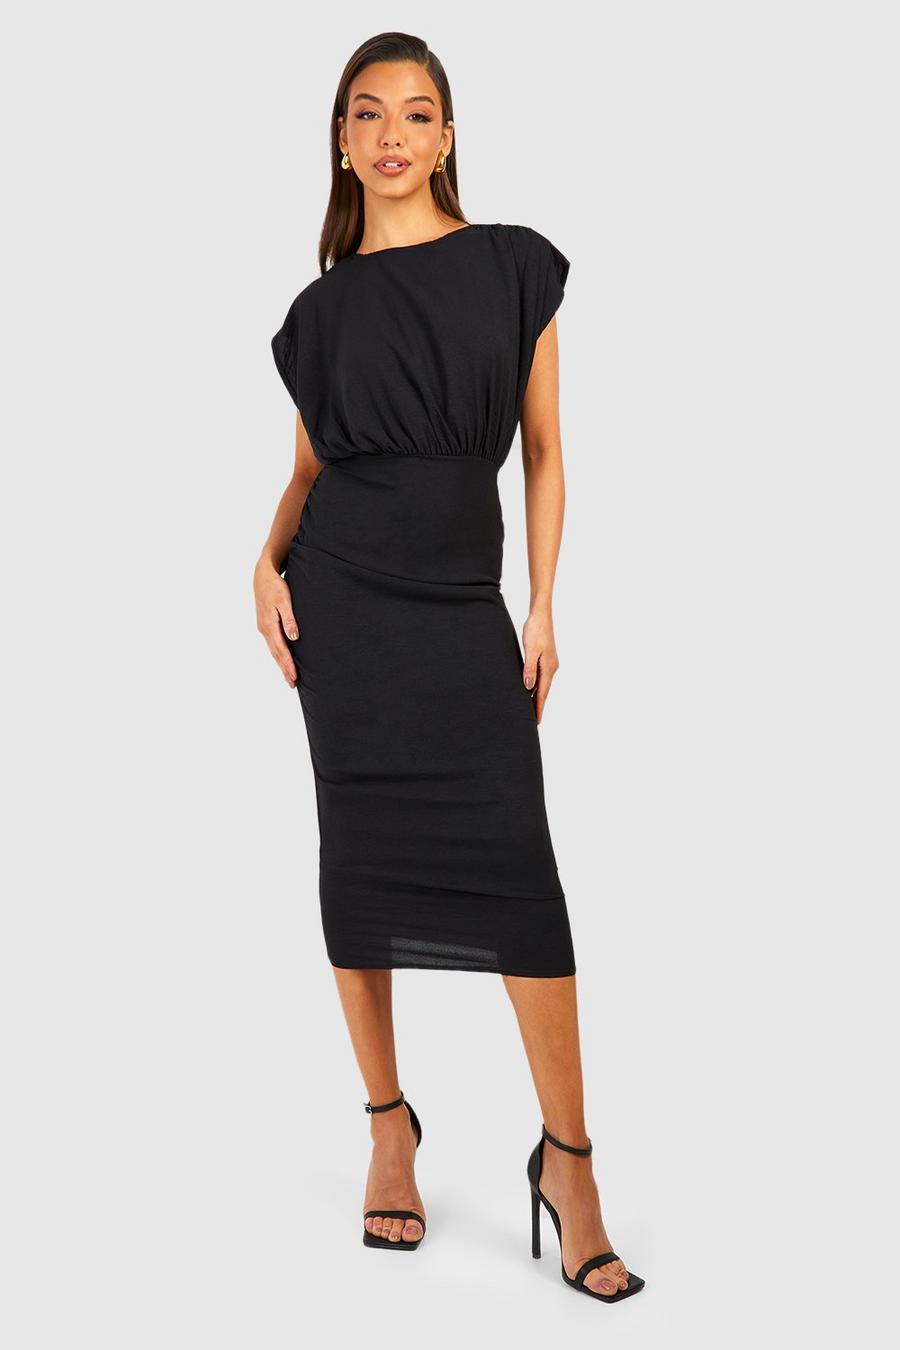 Black Short Sleeve Batwing Midaxi Dress